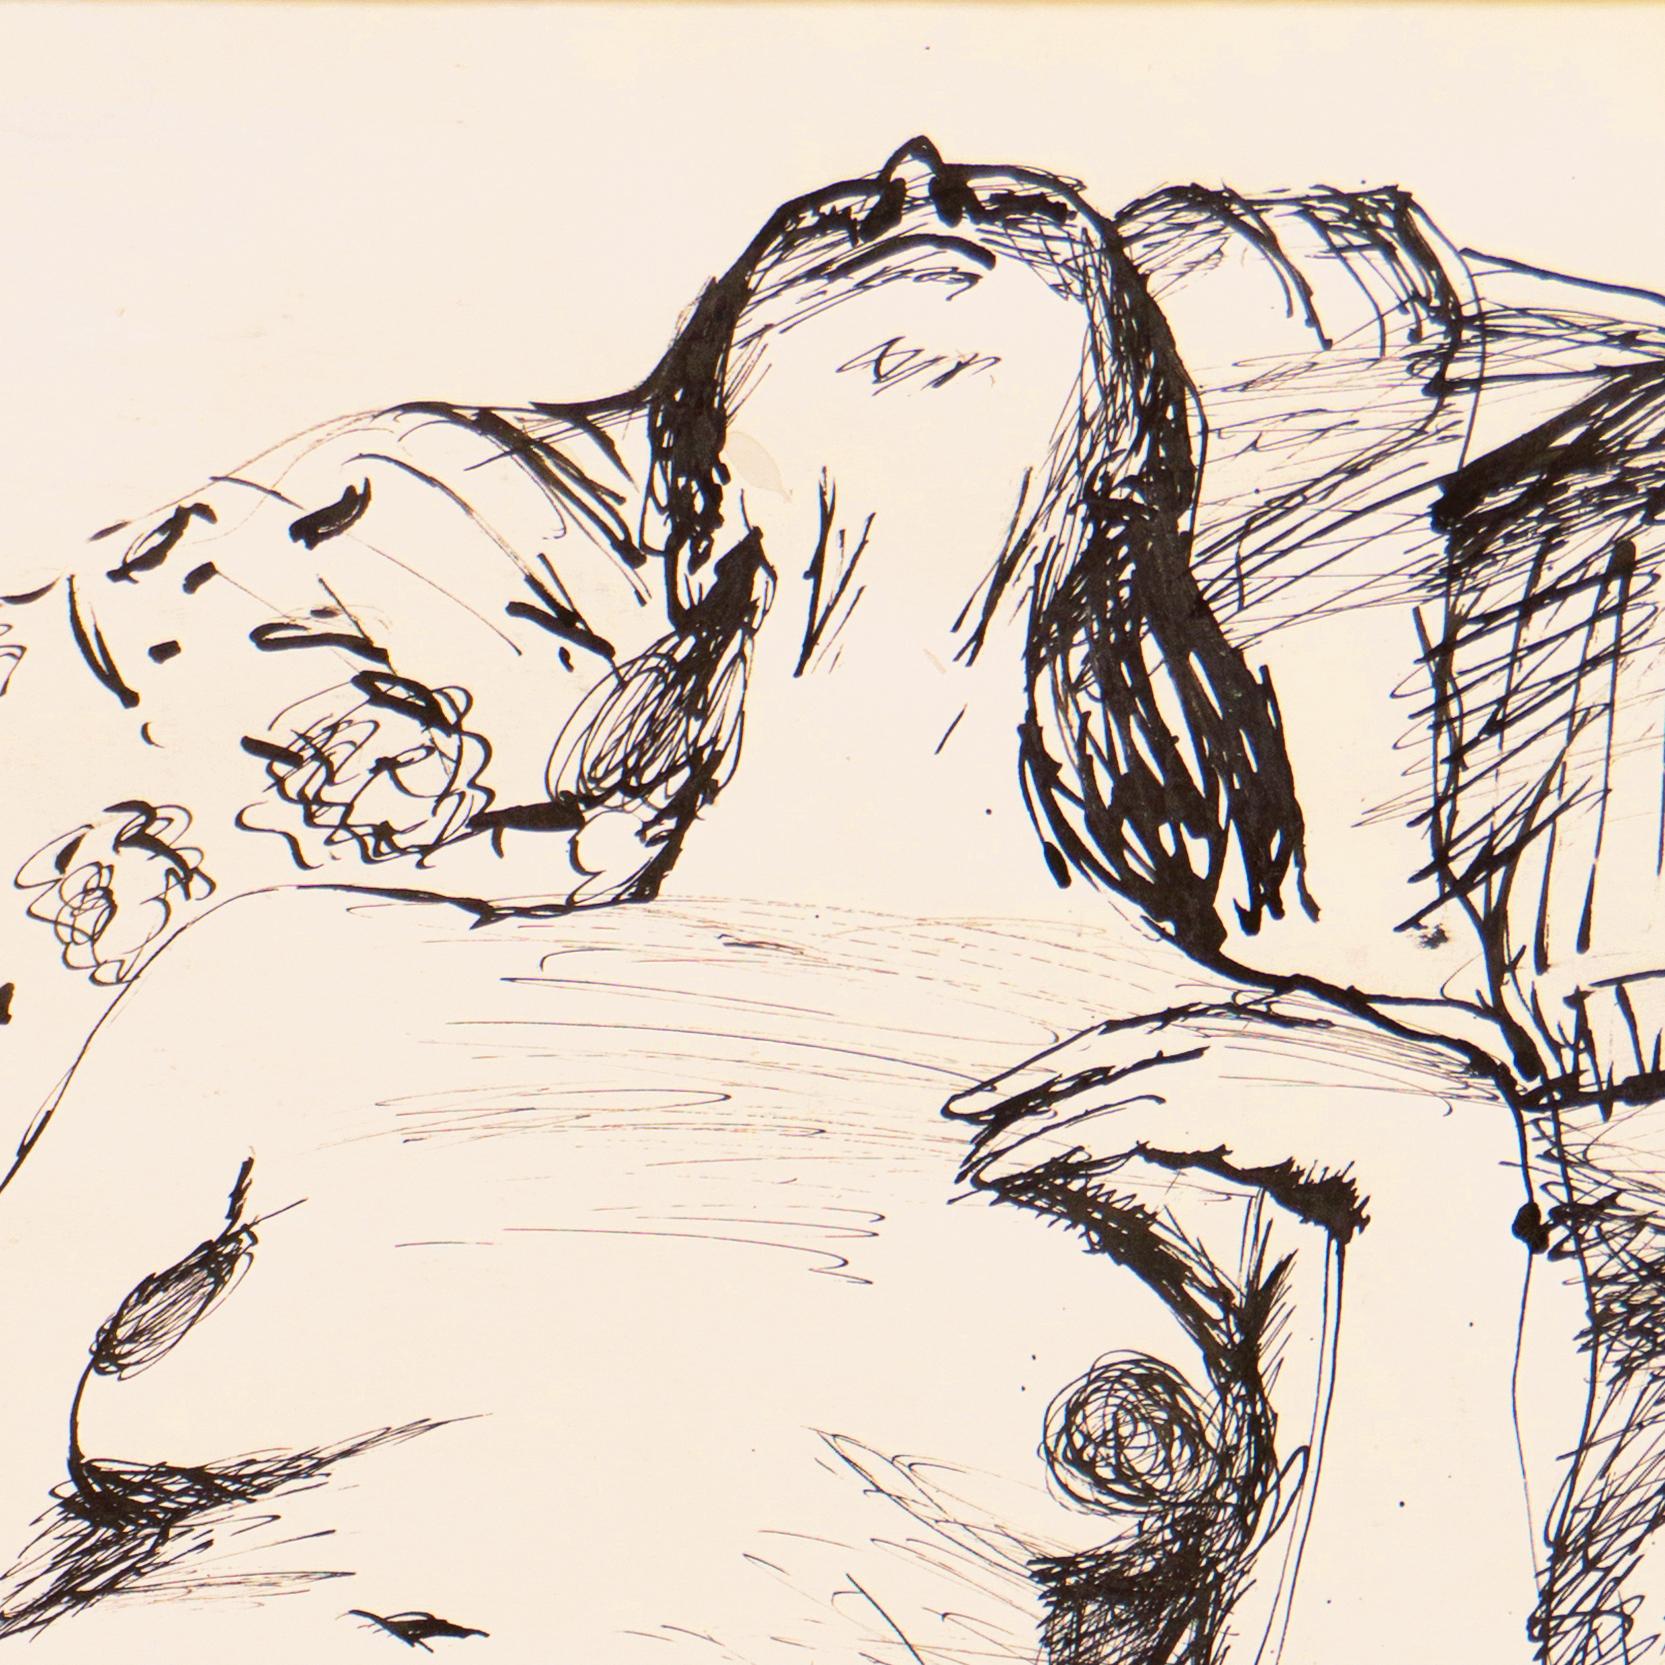 'Reclining Nude', Bay Area Figurative School, CSFA, San Francisco, California - Post-Impressionist Art by Elmer Nelson Bischoff